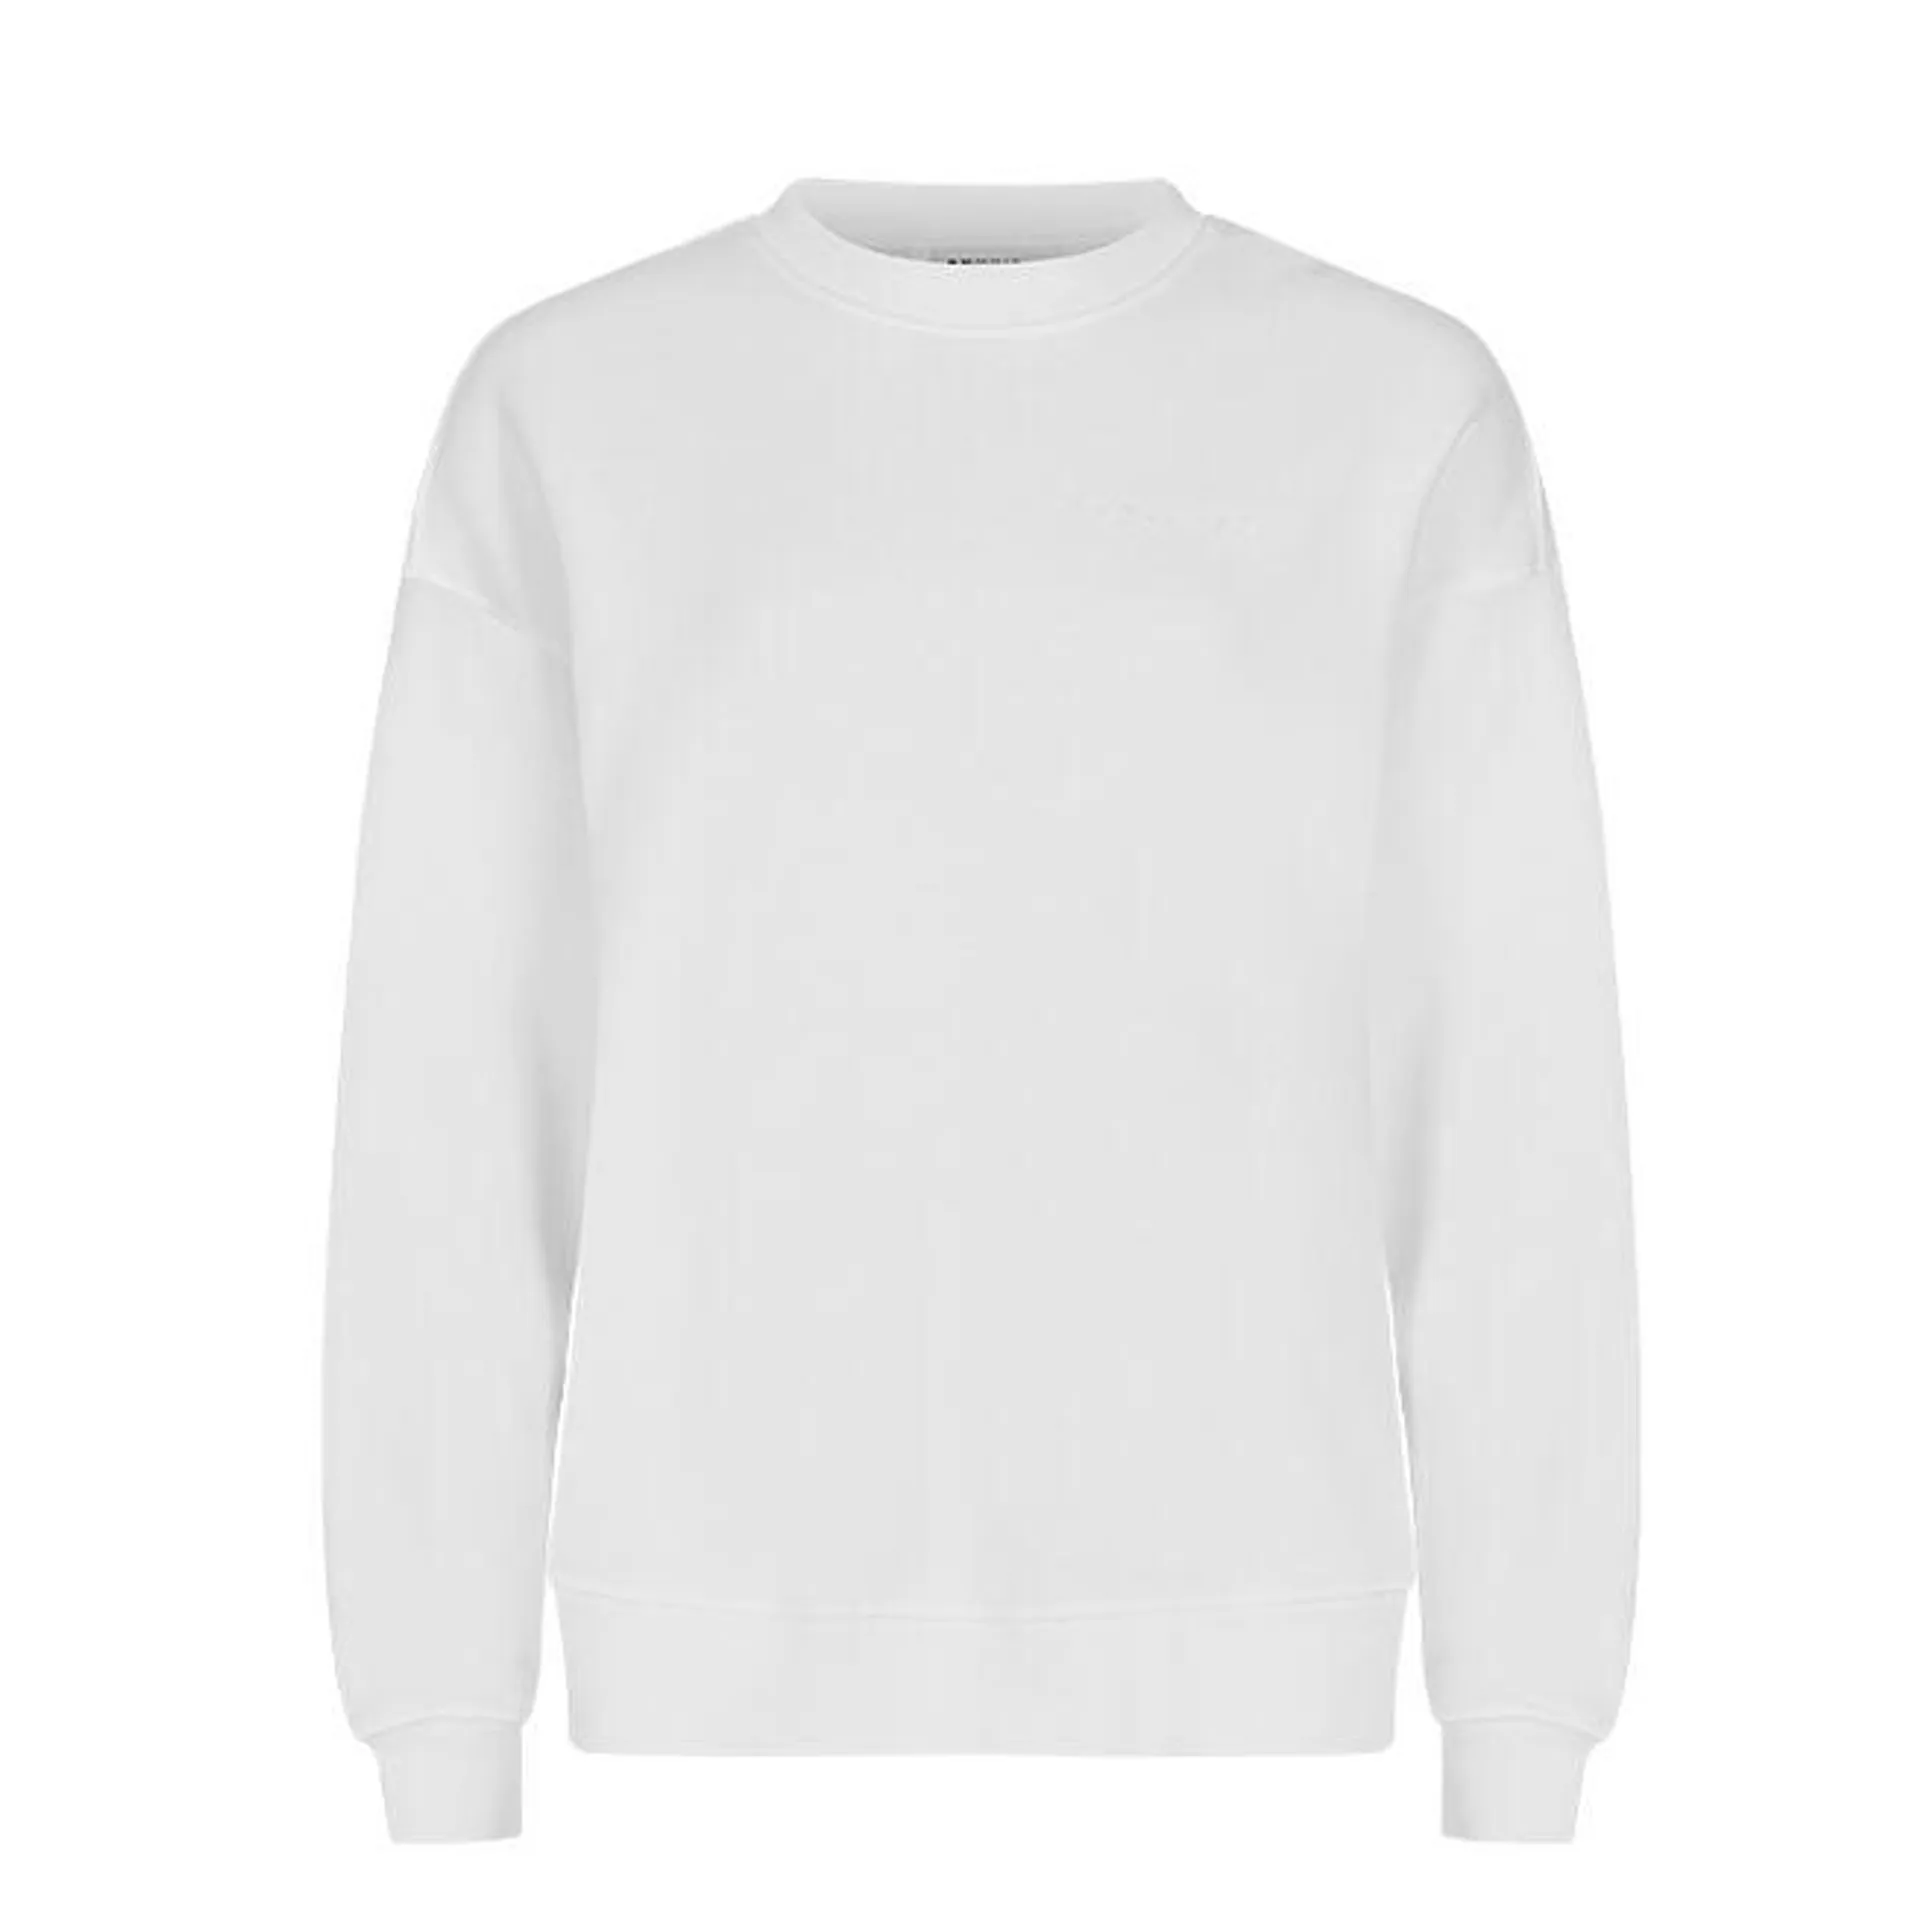 Iconic Sweatshirt, White